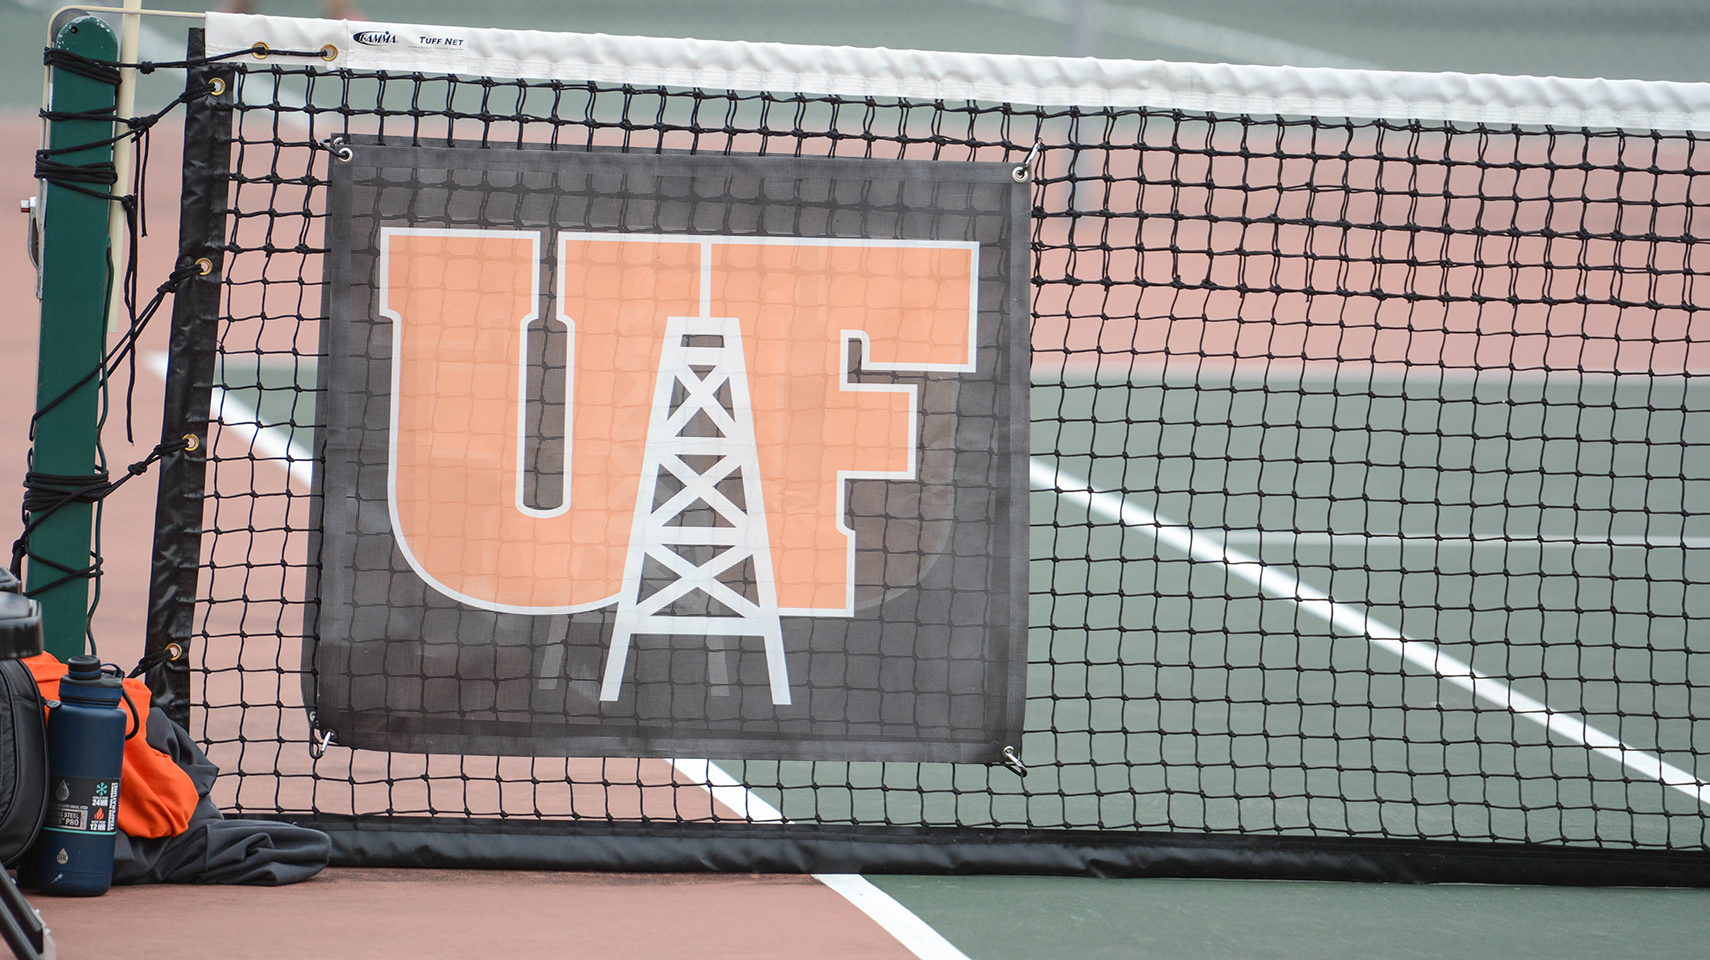 UF logo on tennis net